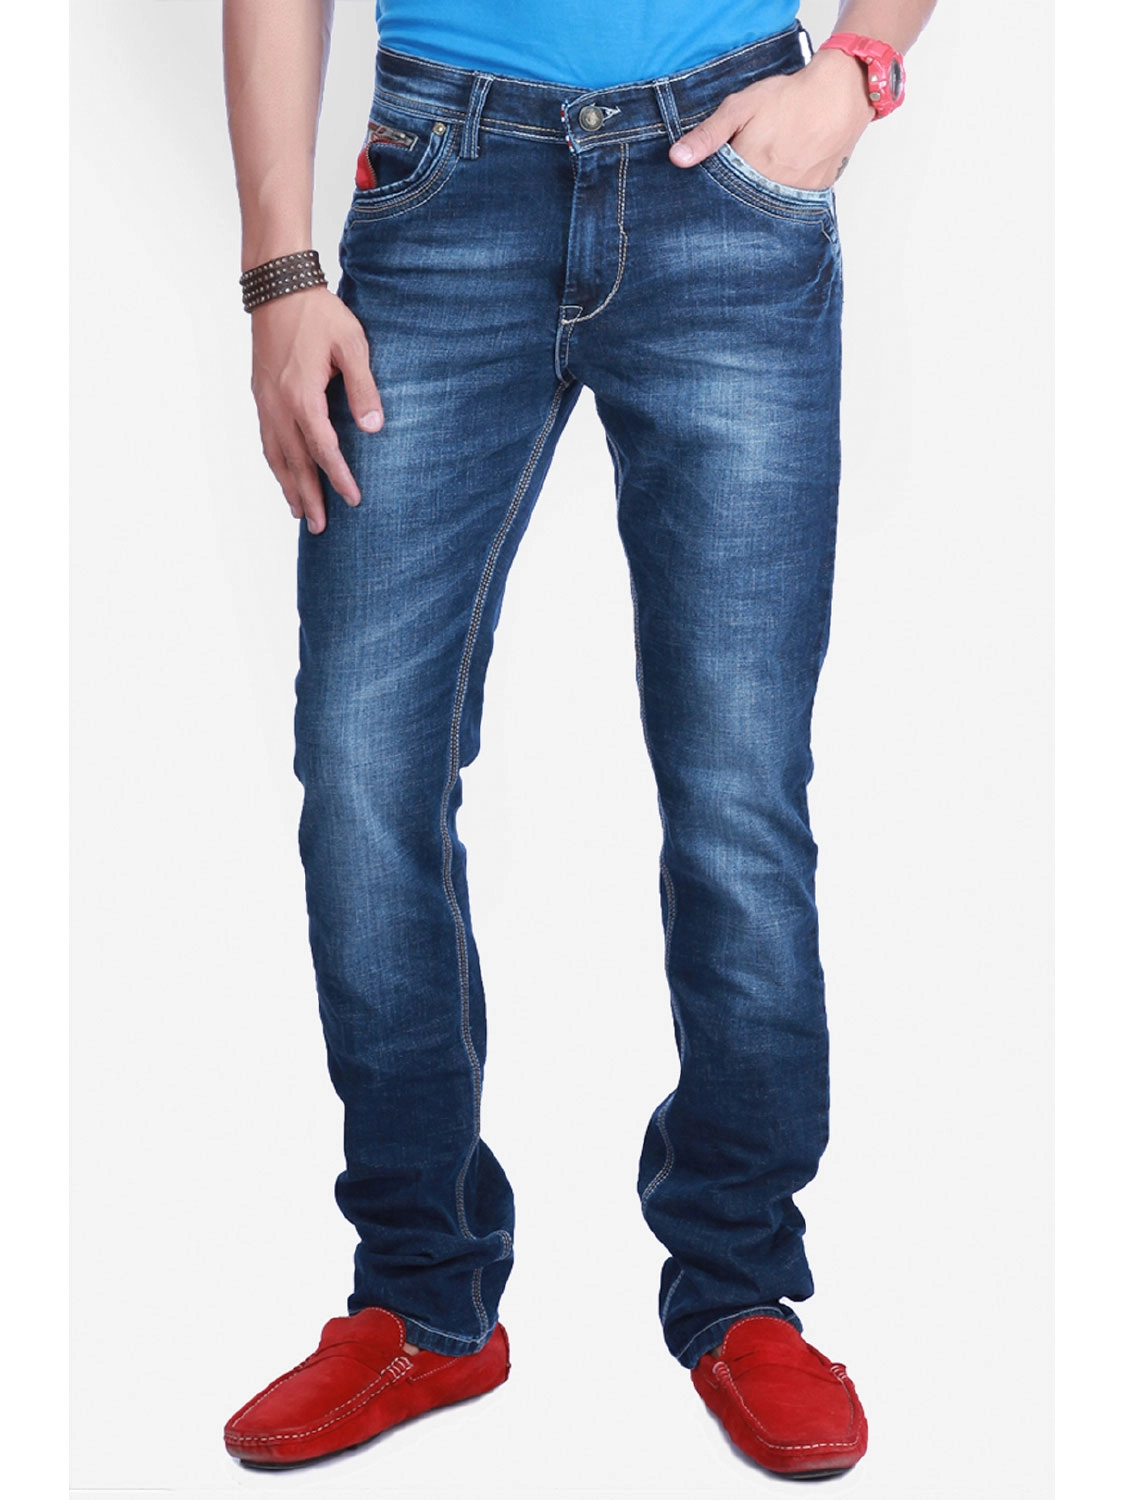 Wholesale Jeans Pants Supplier Bangladesh, Cheap Denim Factory Bangladesh,